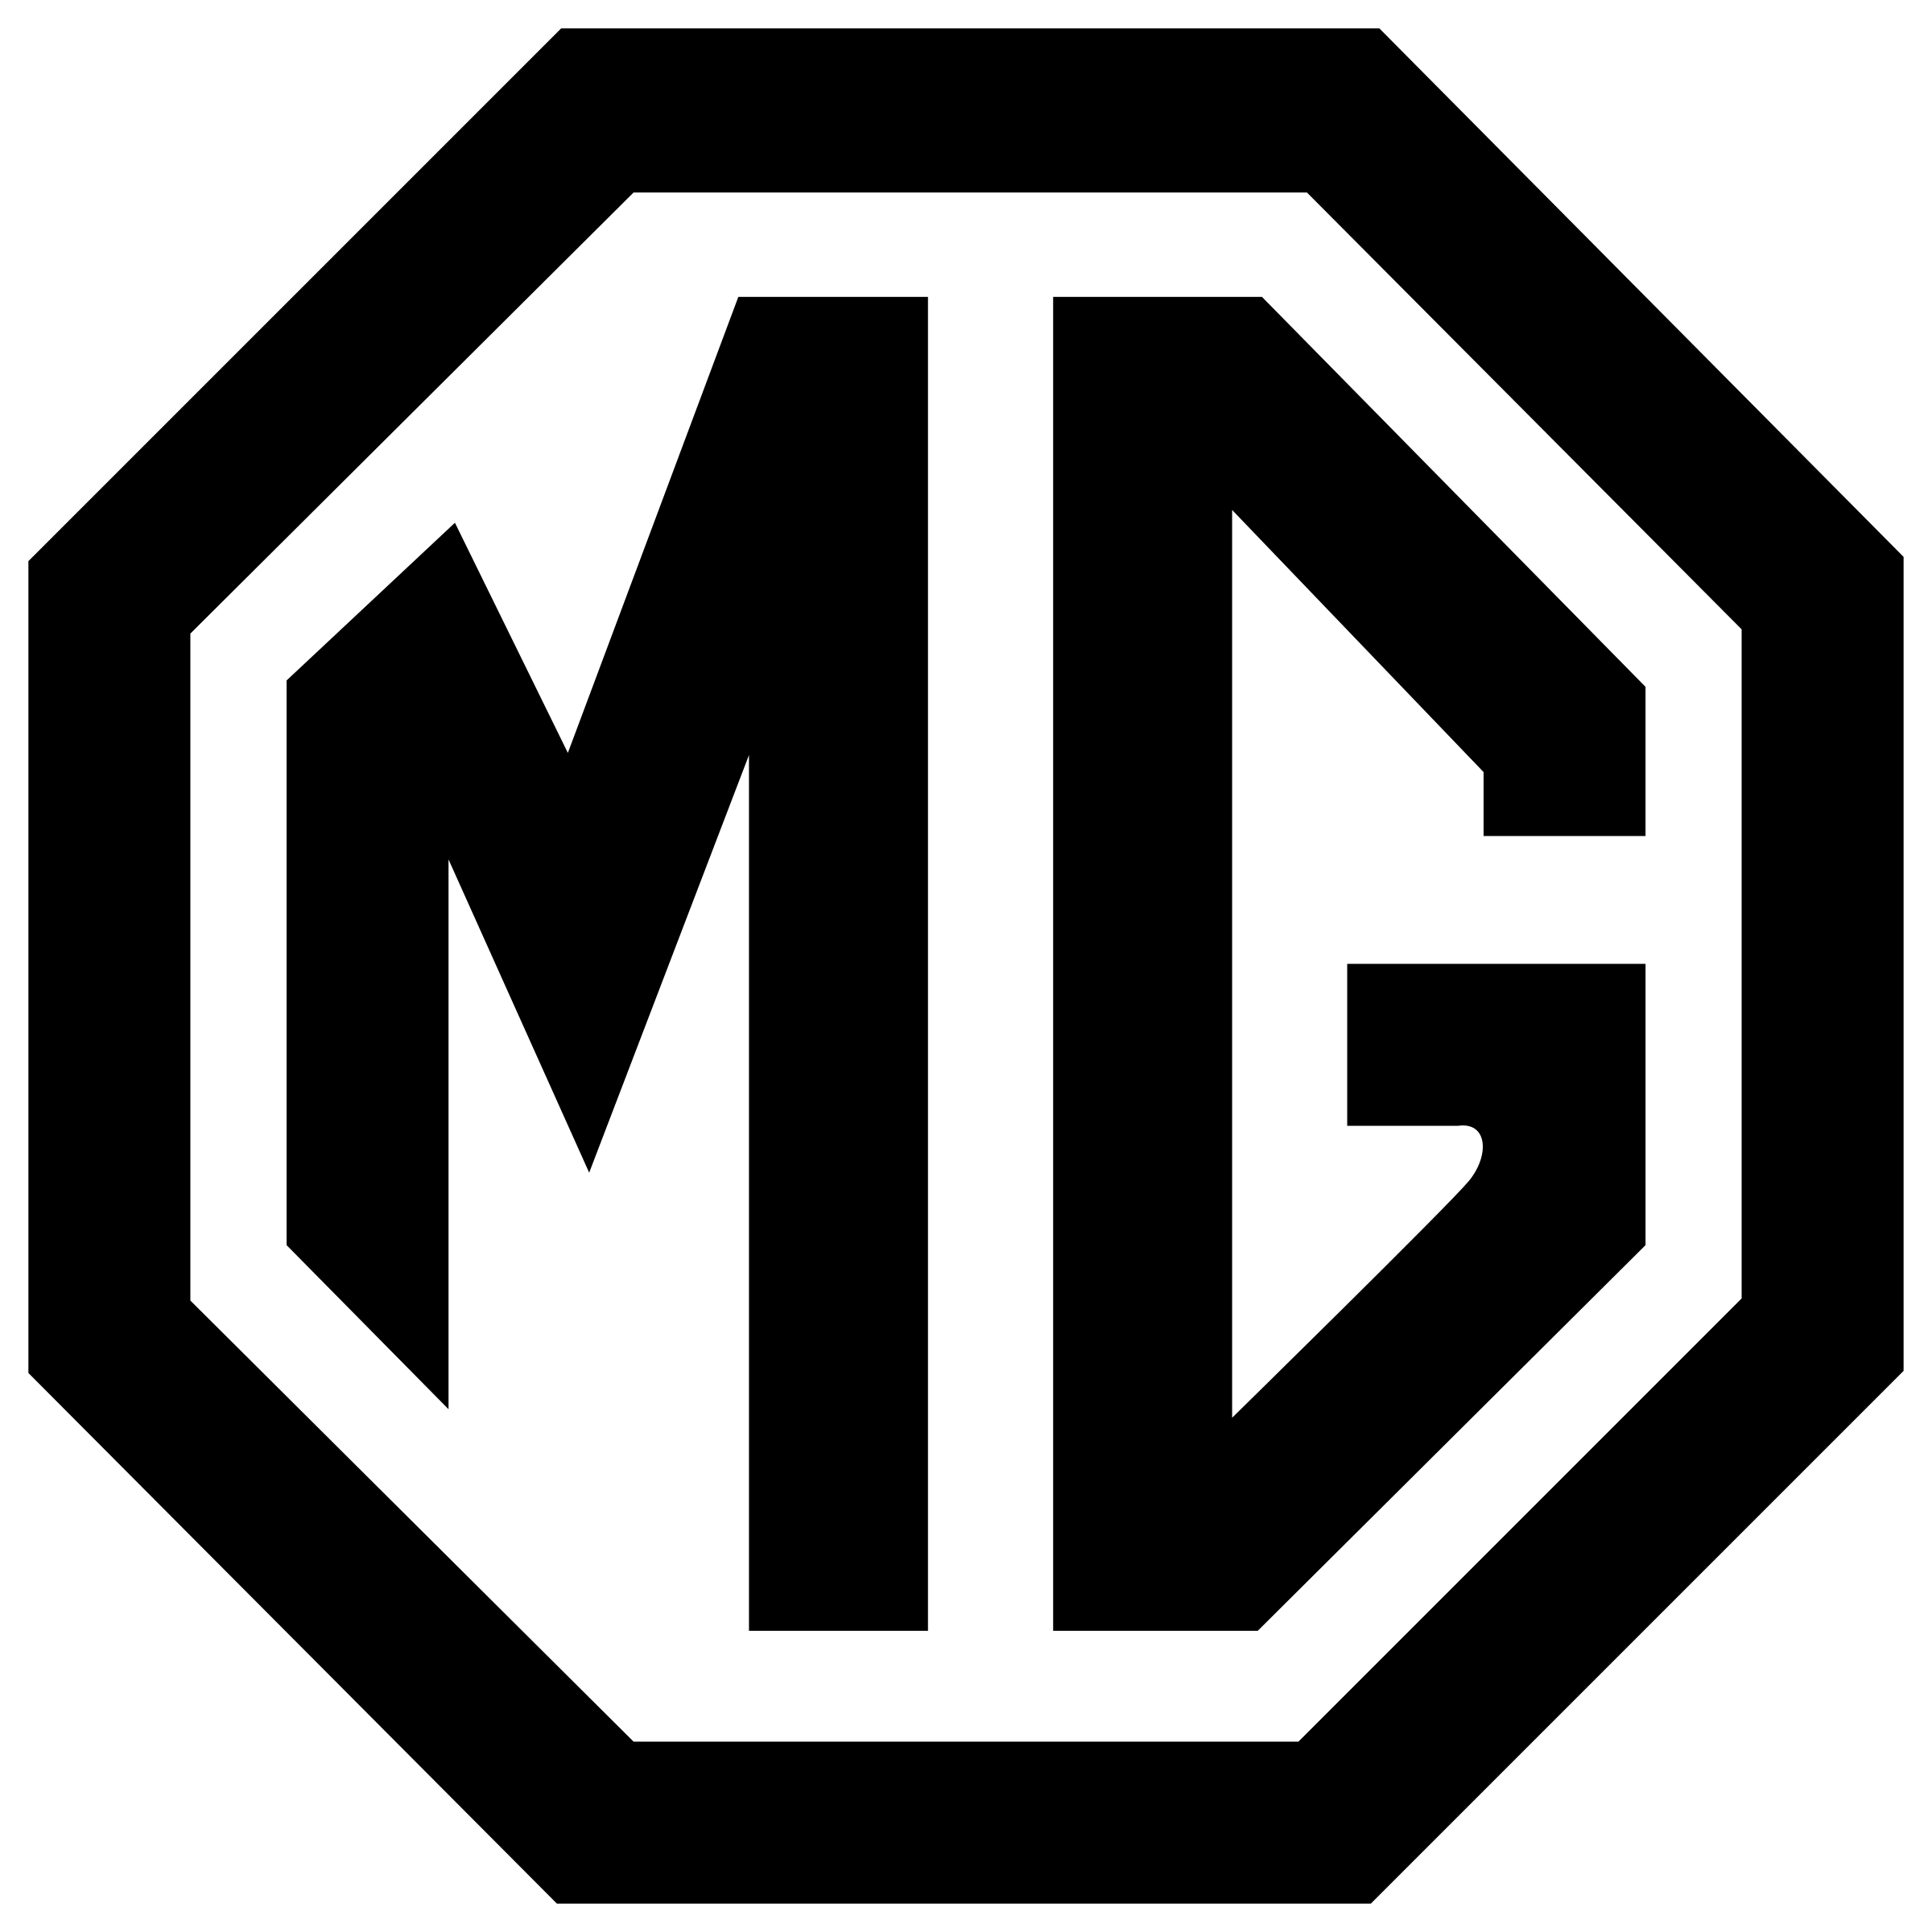 MG Logo PNG Transparent & SVG Vector.